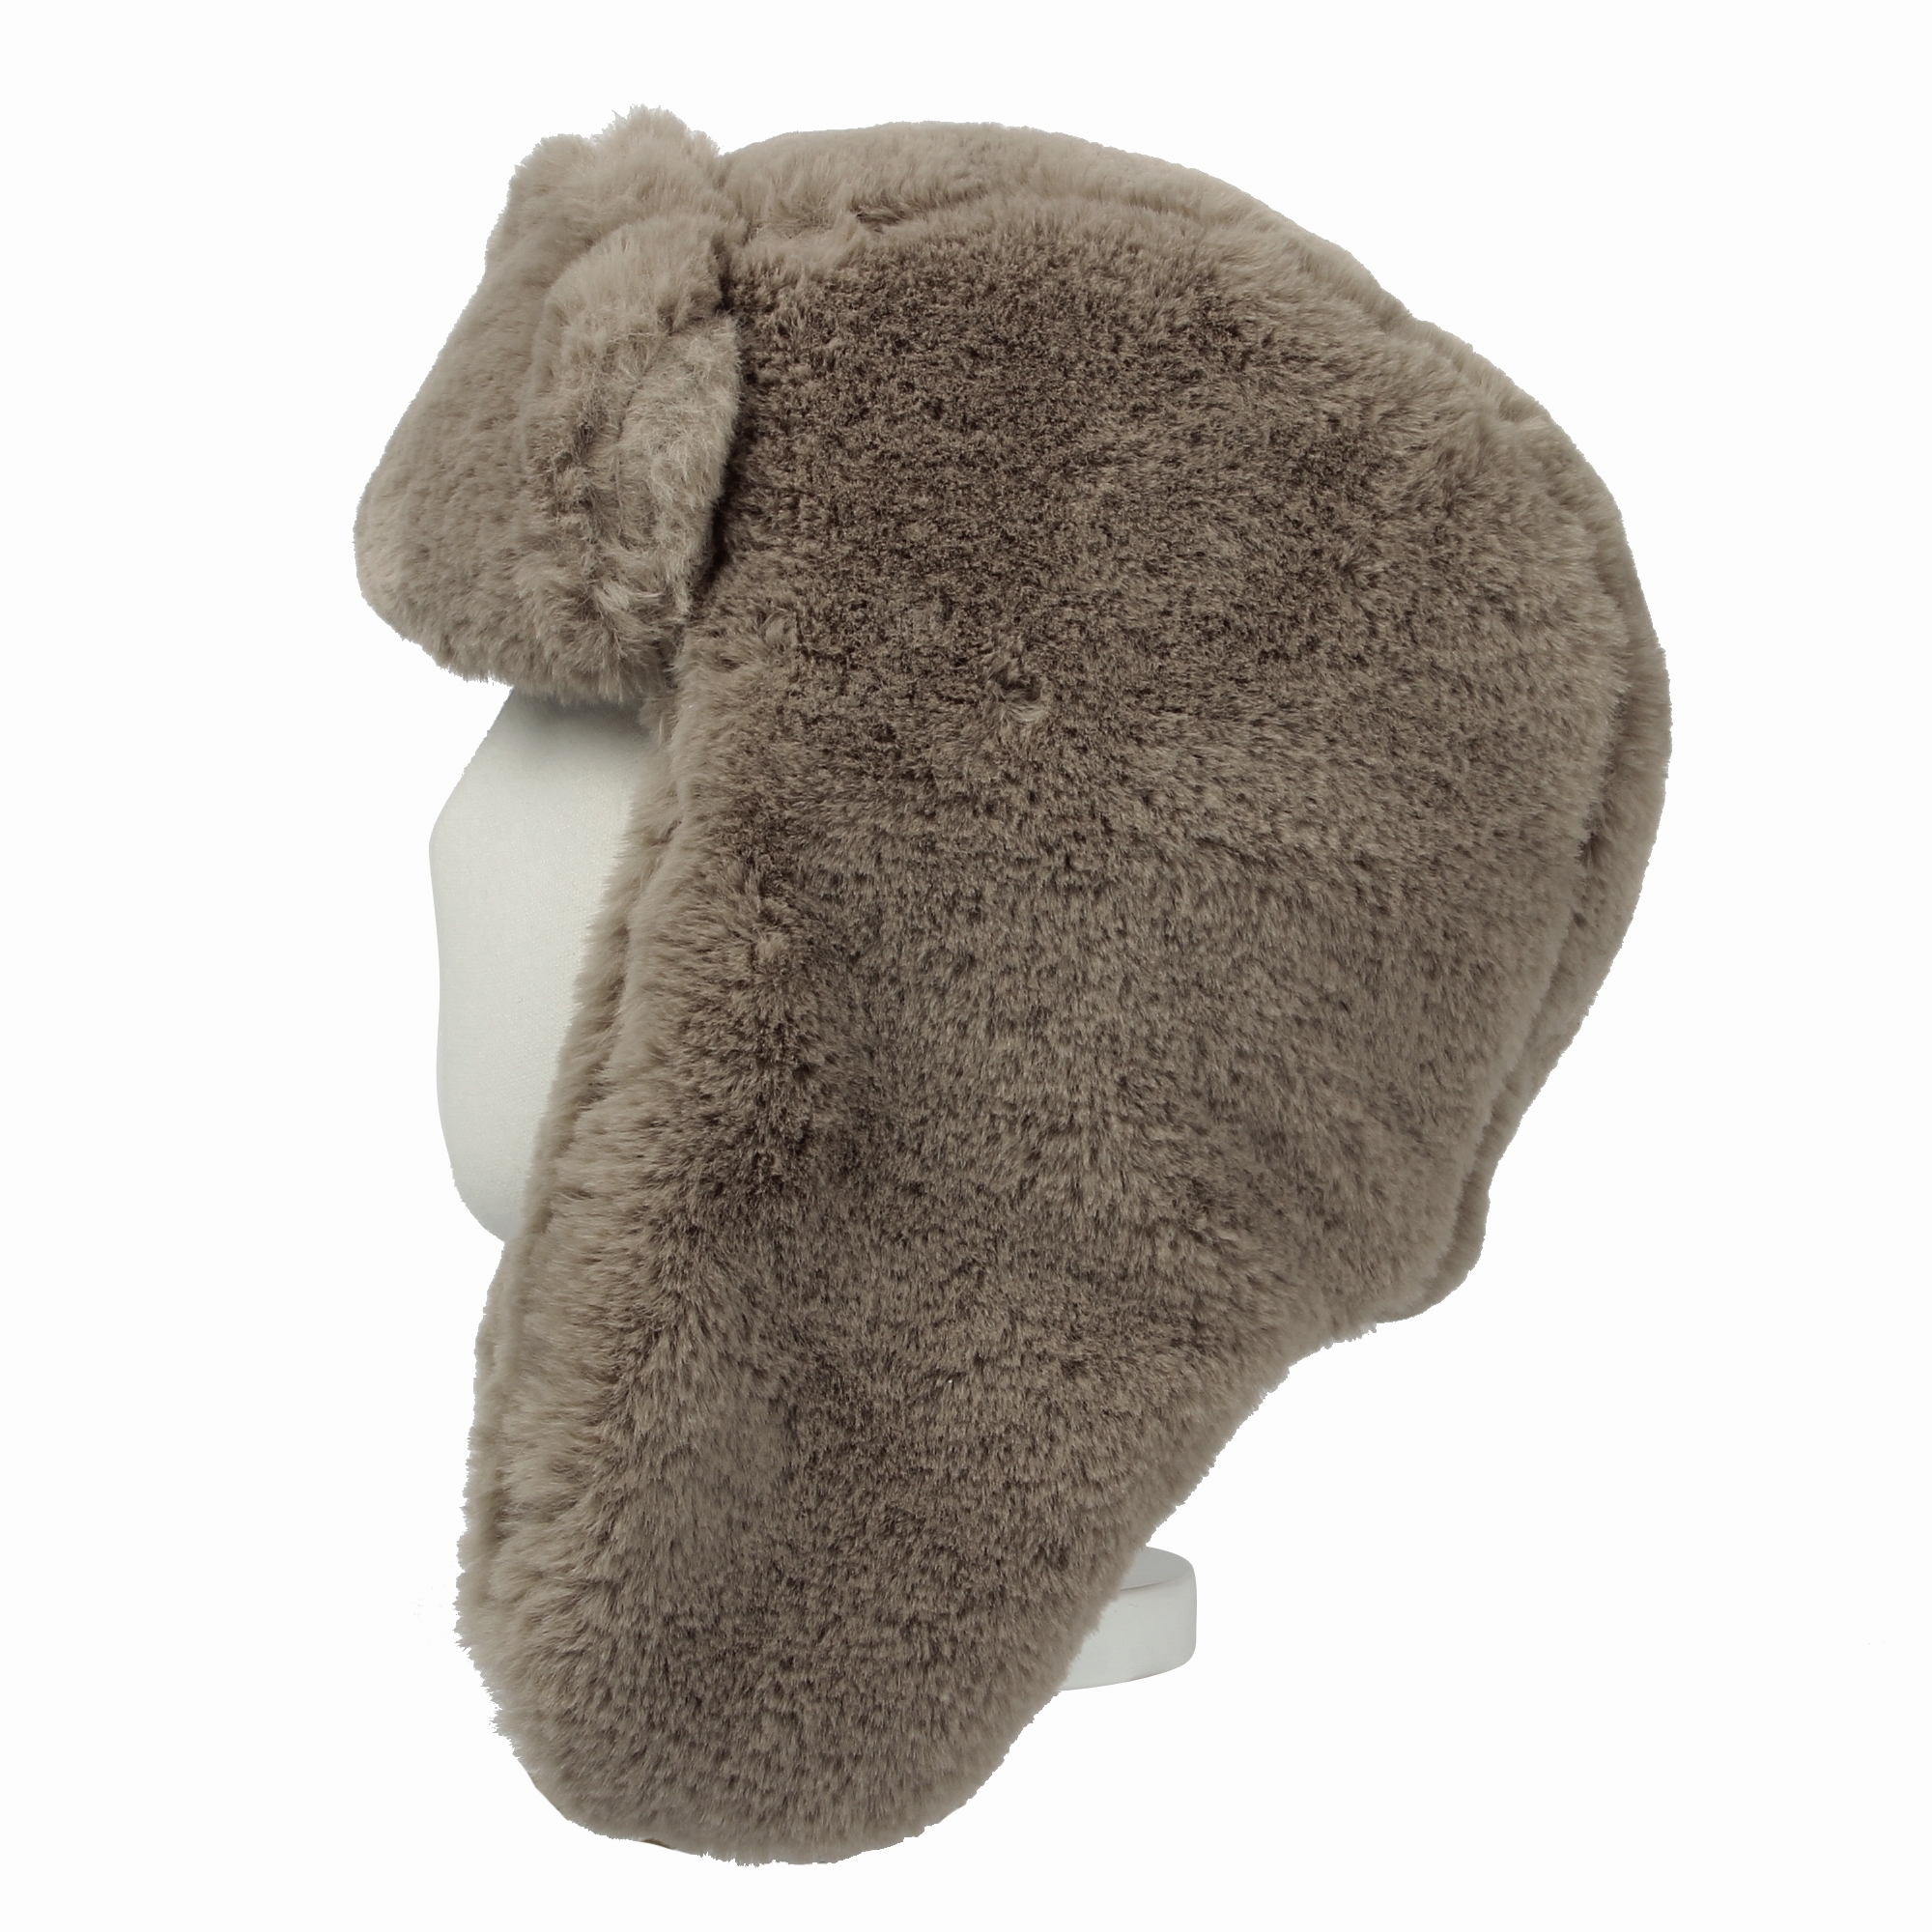 WITHMOONS Winter Faux Fur Snow Trapper Russian Hat Ear Flaps KRT1149 | eBay